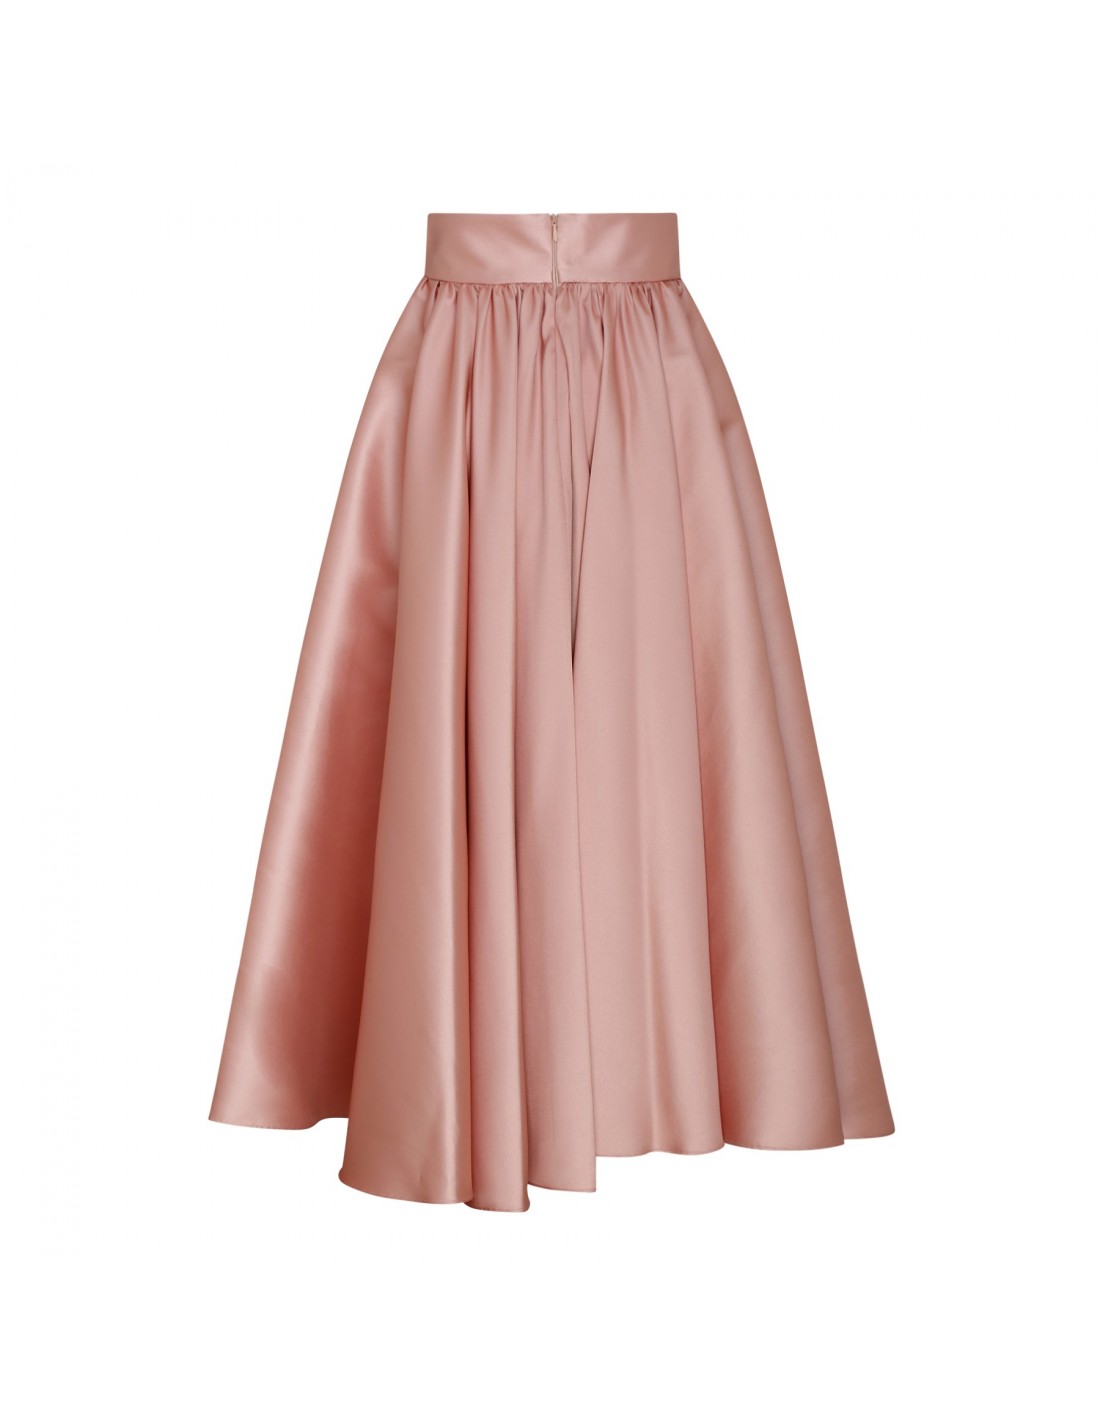 Powder pink pleated skirt